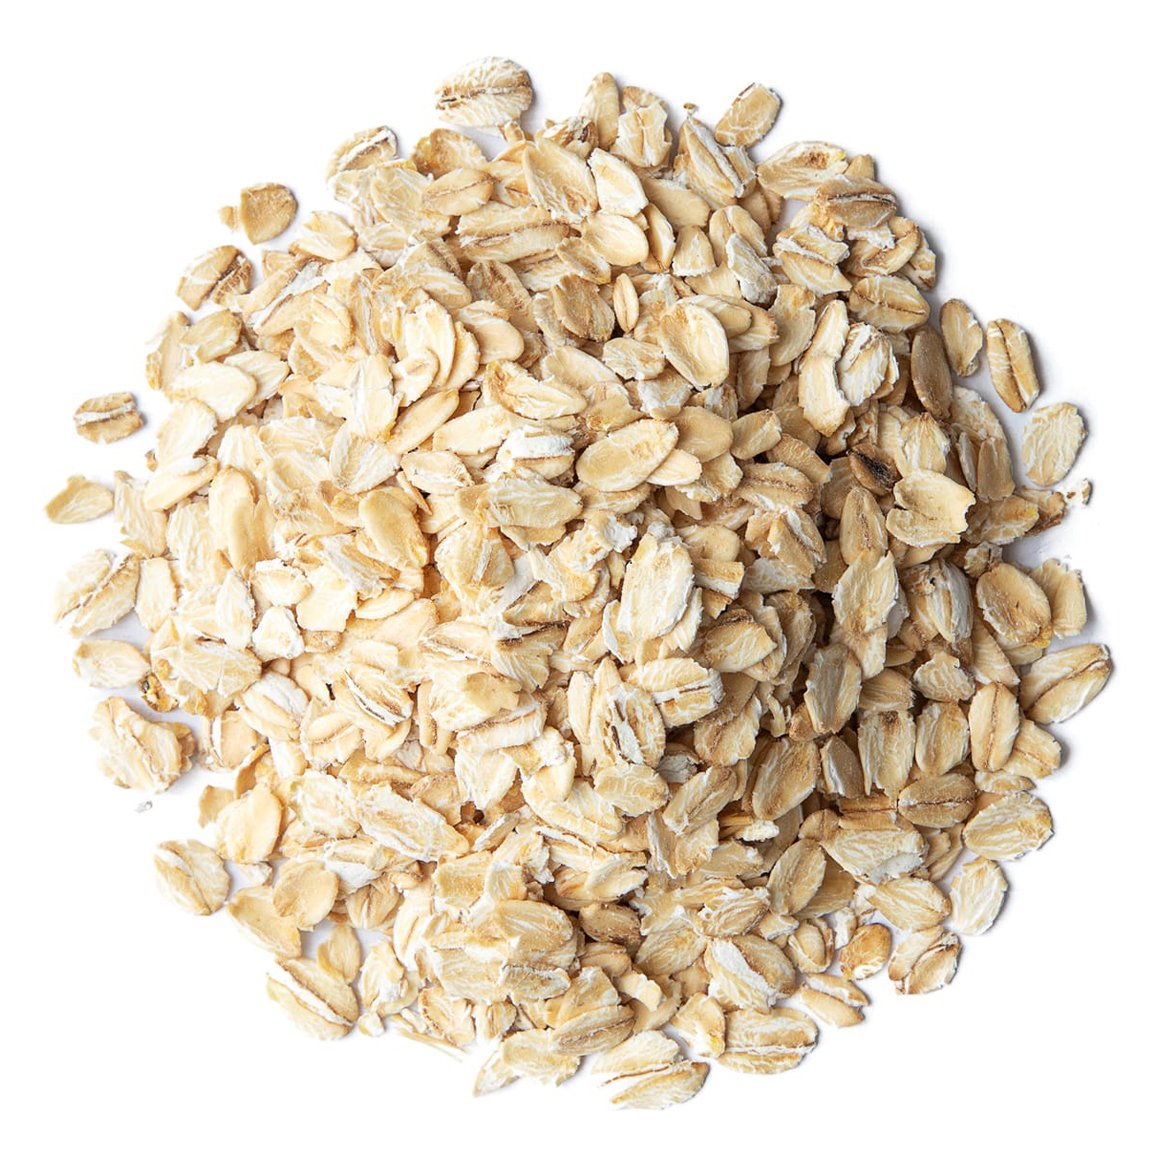 organic-certified-gluten-free-regular-rolled-oats-background-main